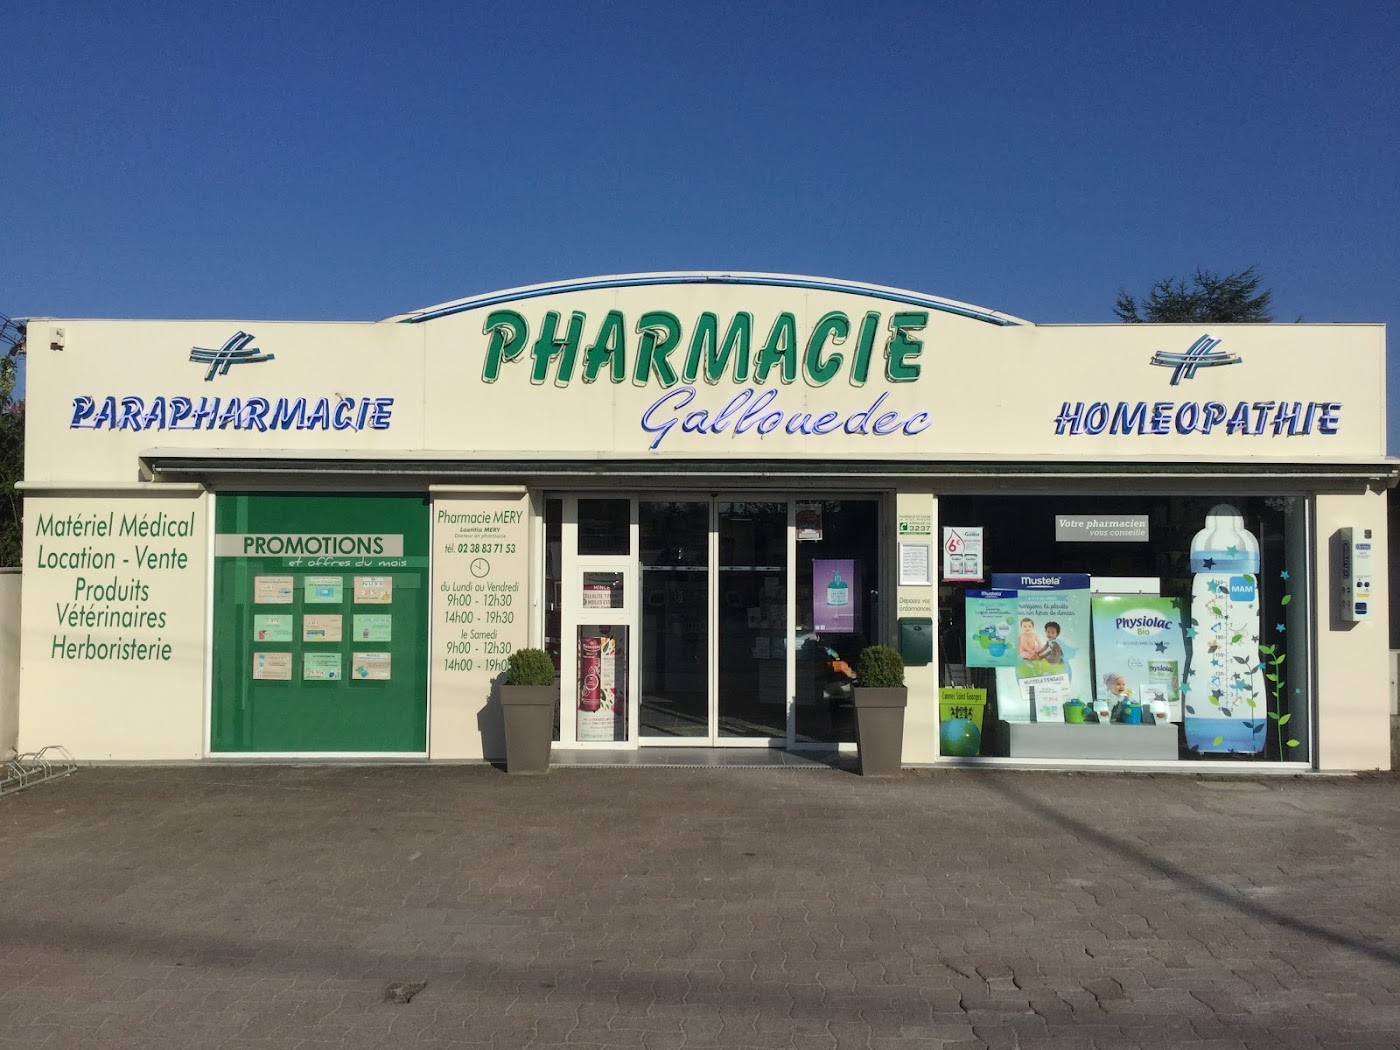 Pharmacie Mery